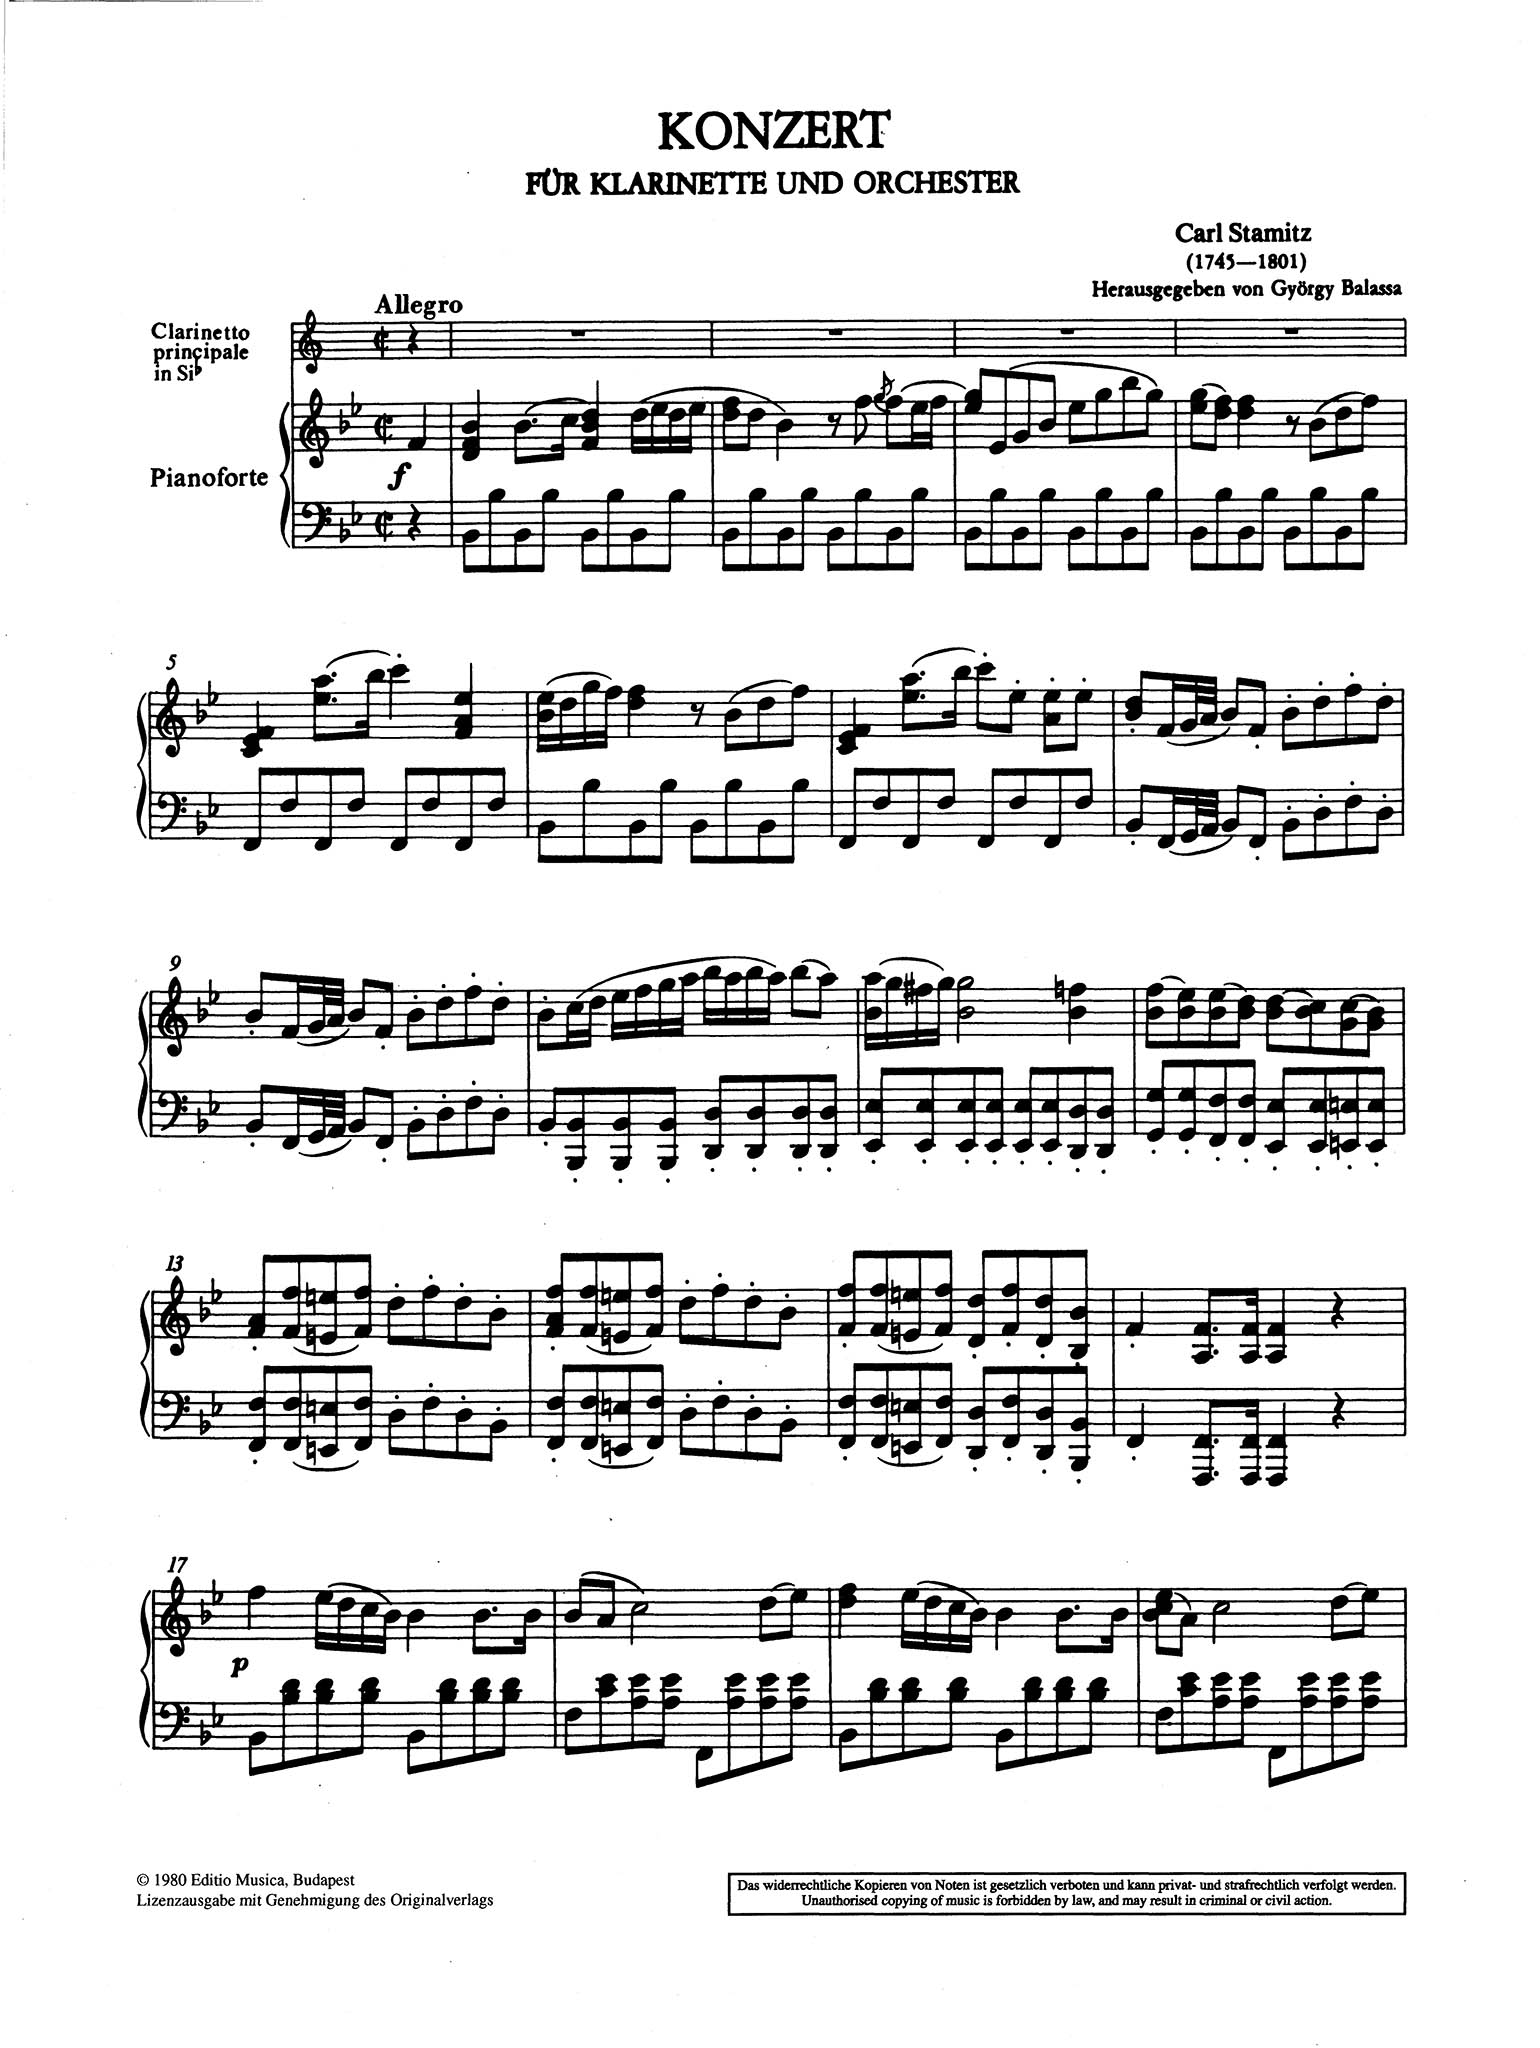 Clarinet Concerto No. 9 (Kaiser) in B-flat Major - Movement 1